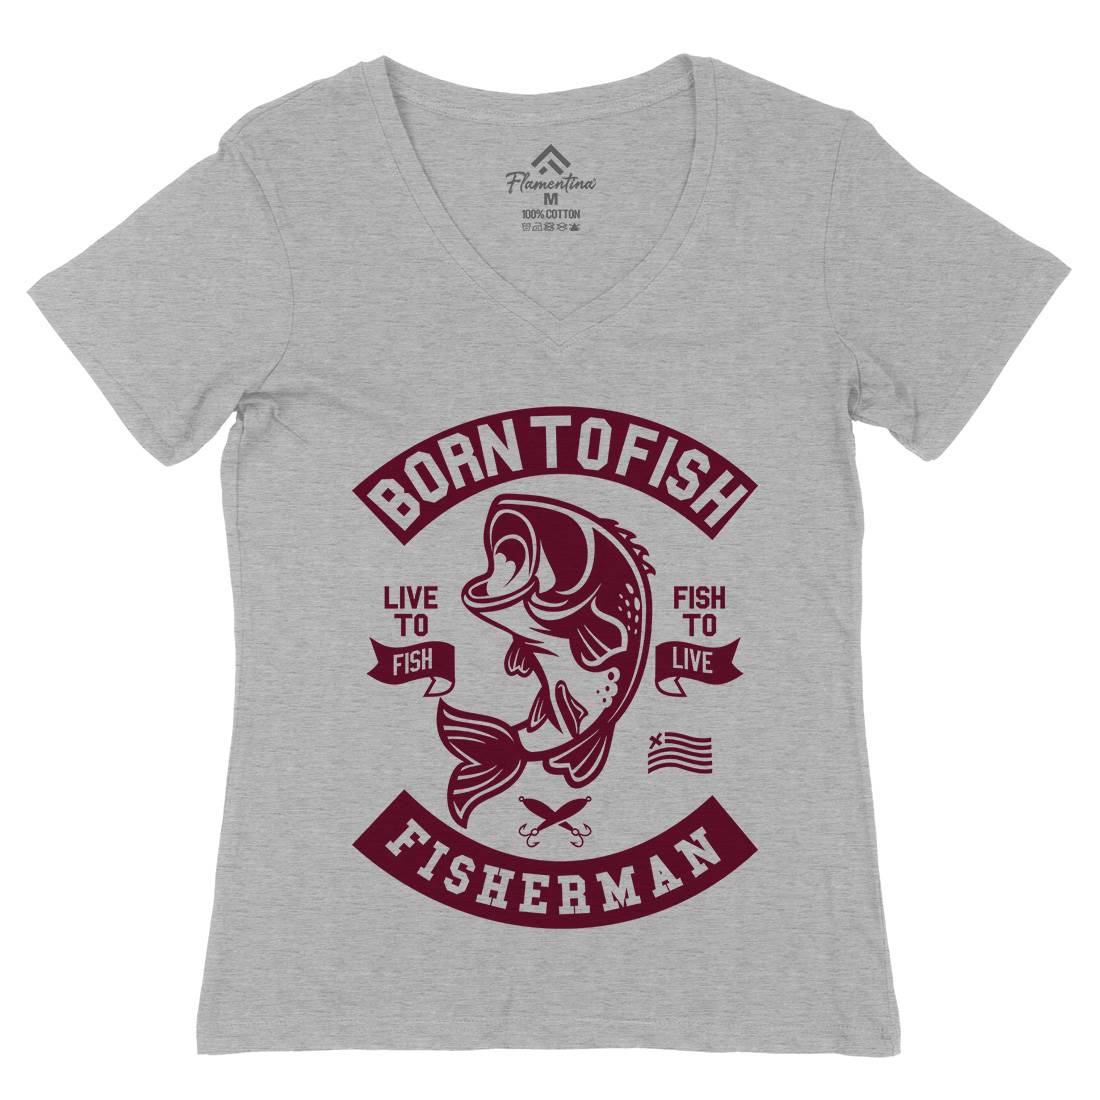 Born To Fish Womens Organic V-Neck T-Shirt Fishing A208